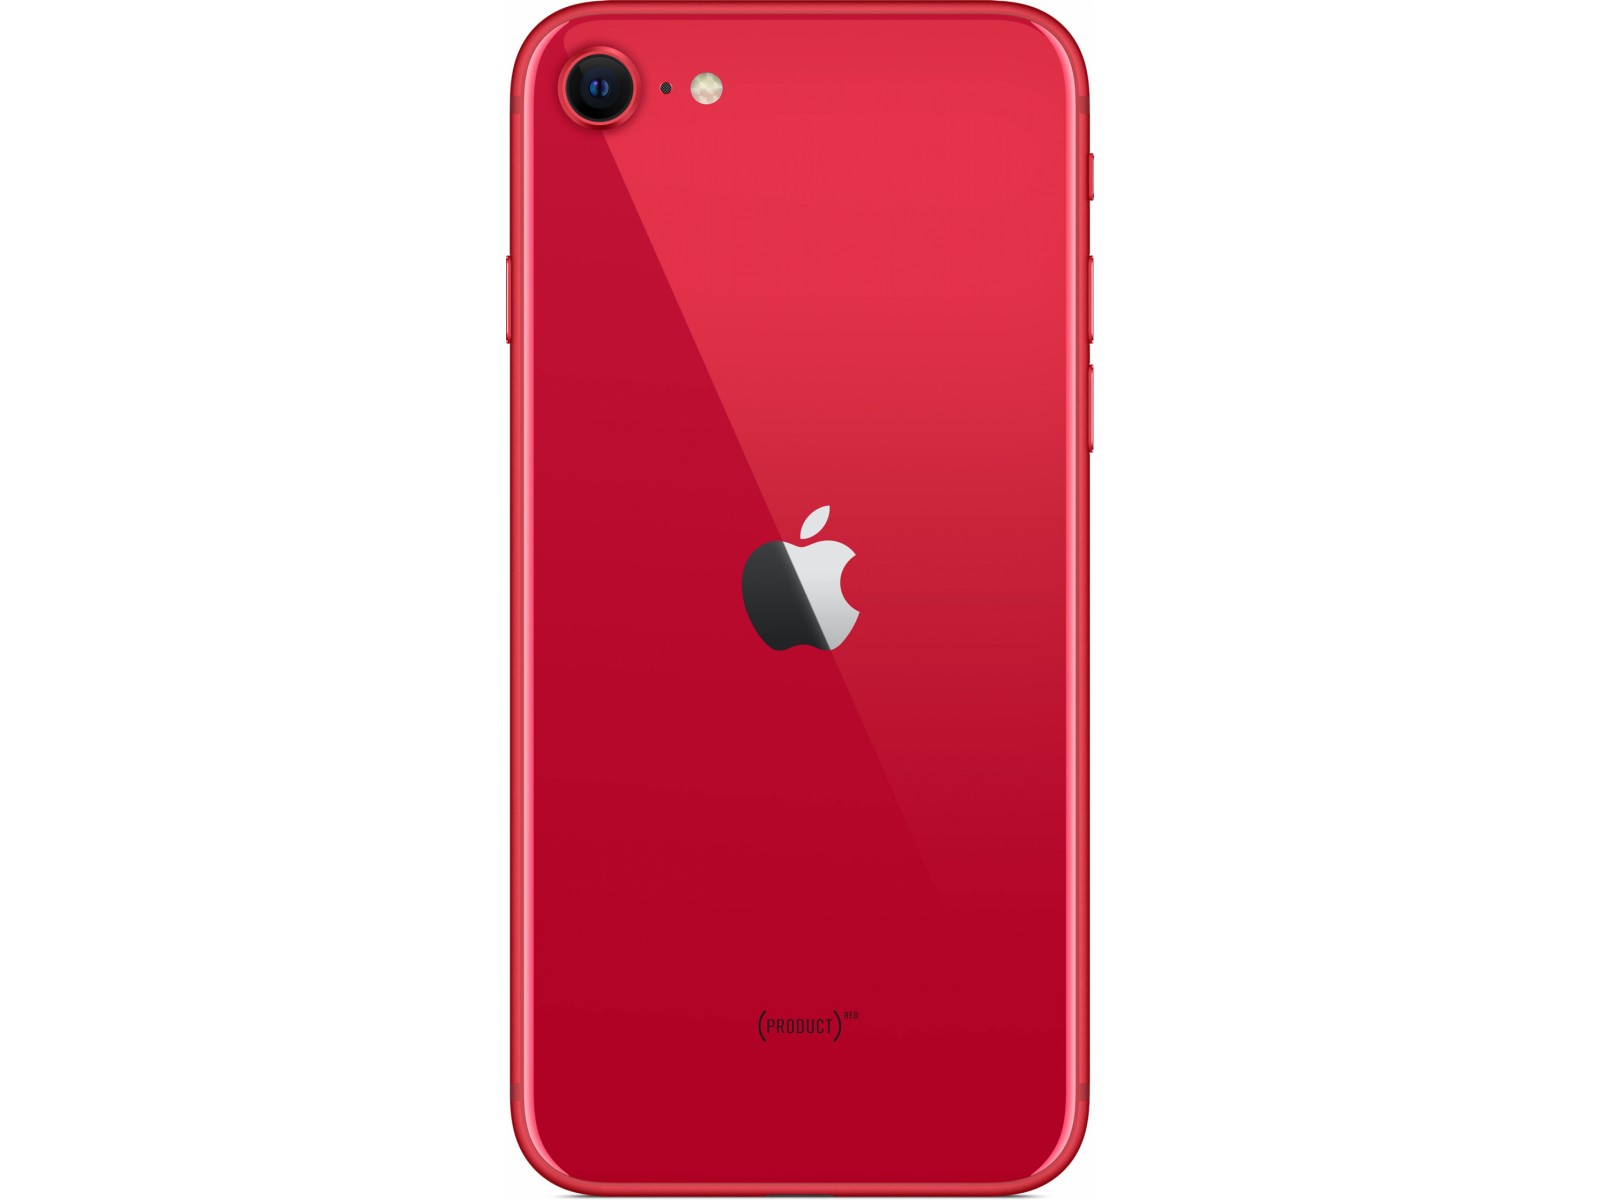 Красный телефон айфон. Apple iphone se 2020 64gb Red. Iphone 11 64gb Red. Apple iphone se 2020 128gb Red. Iphone 11 256gb (product)Red.